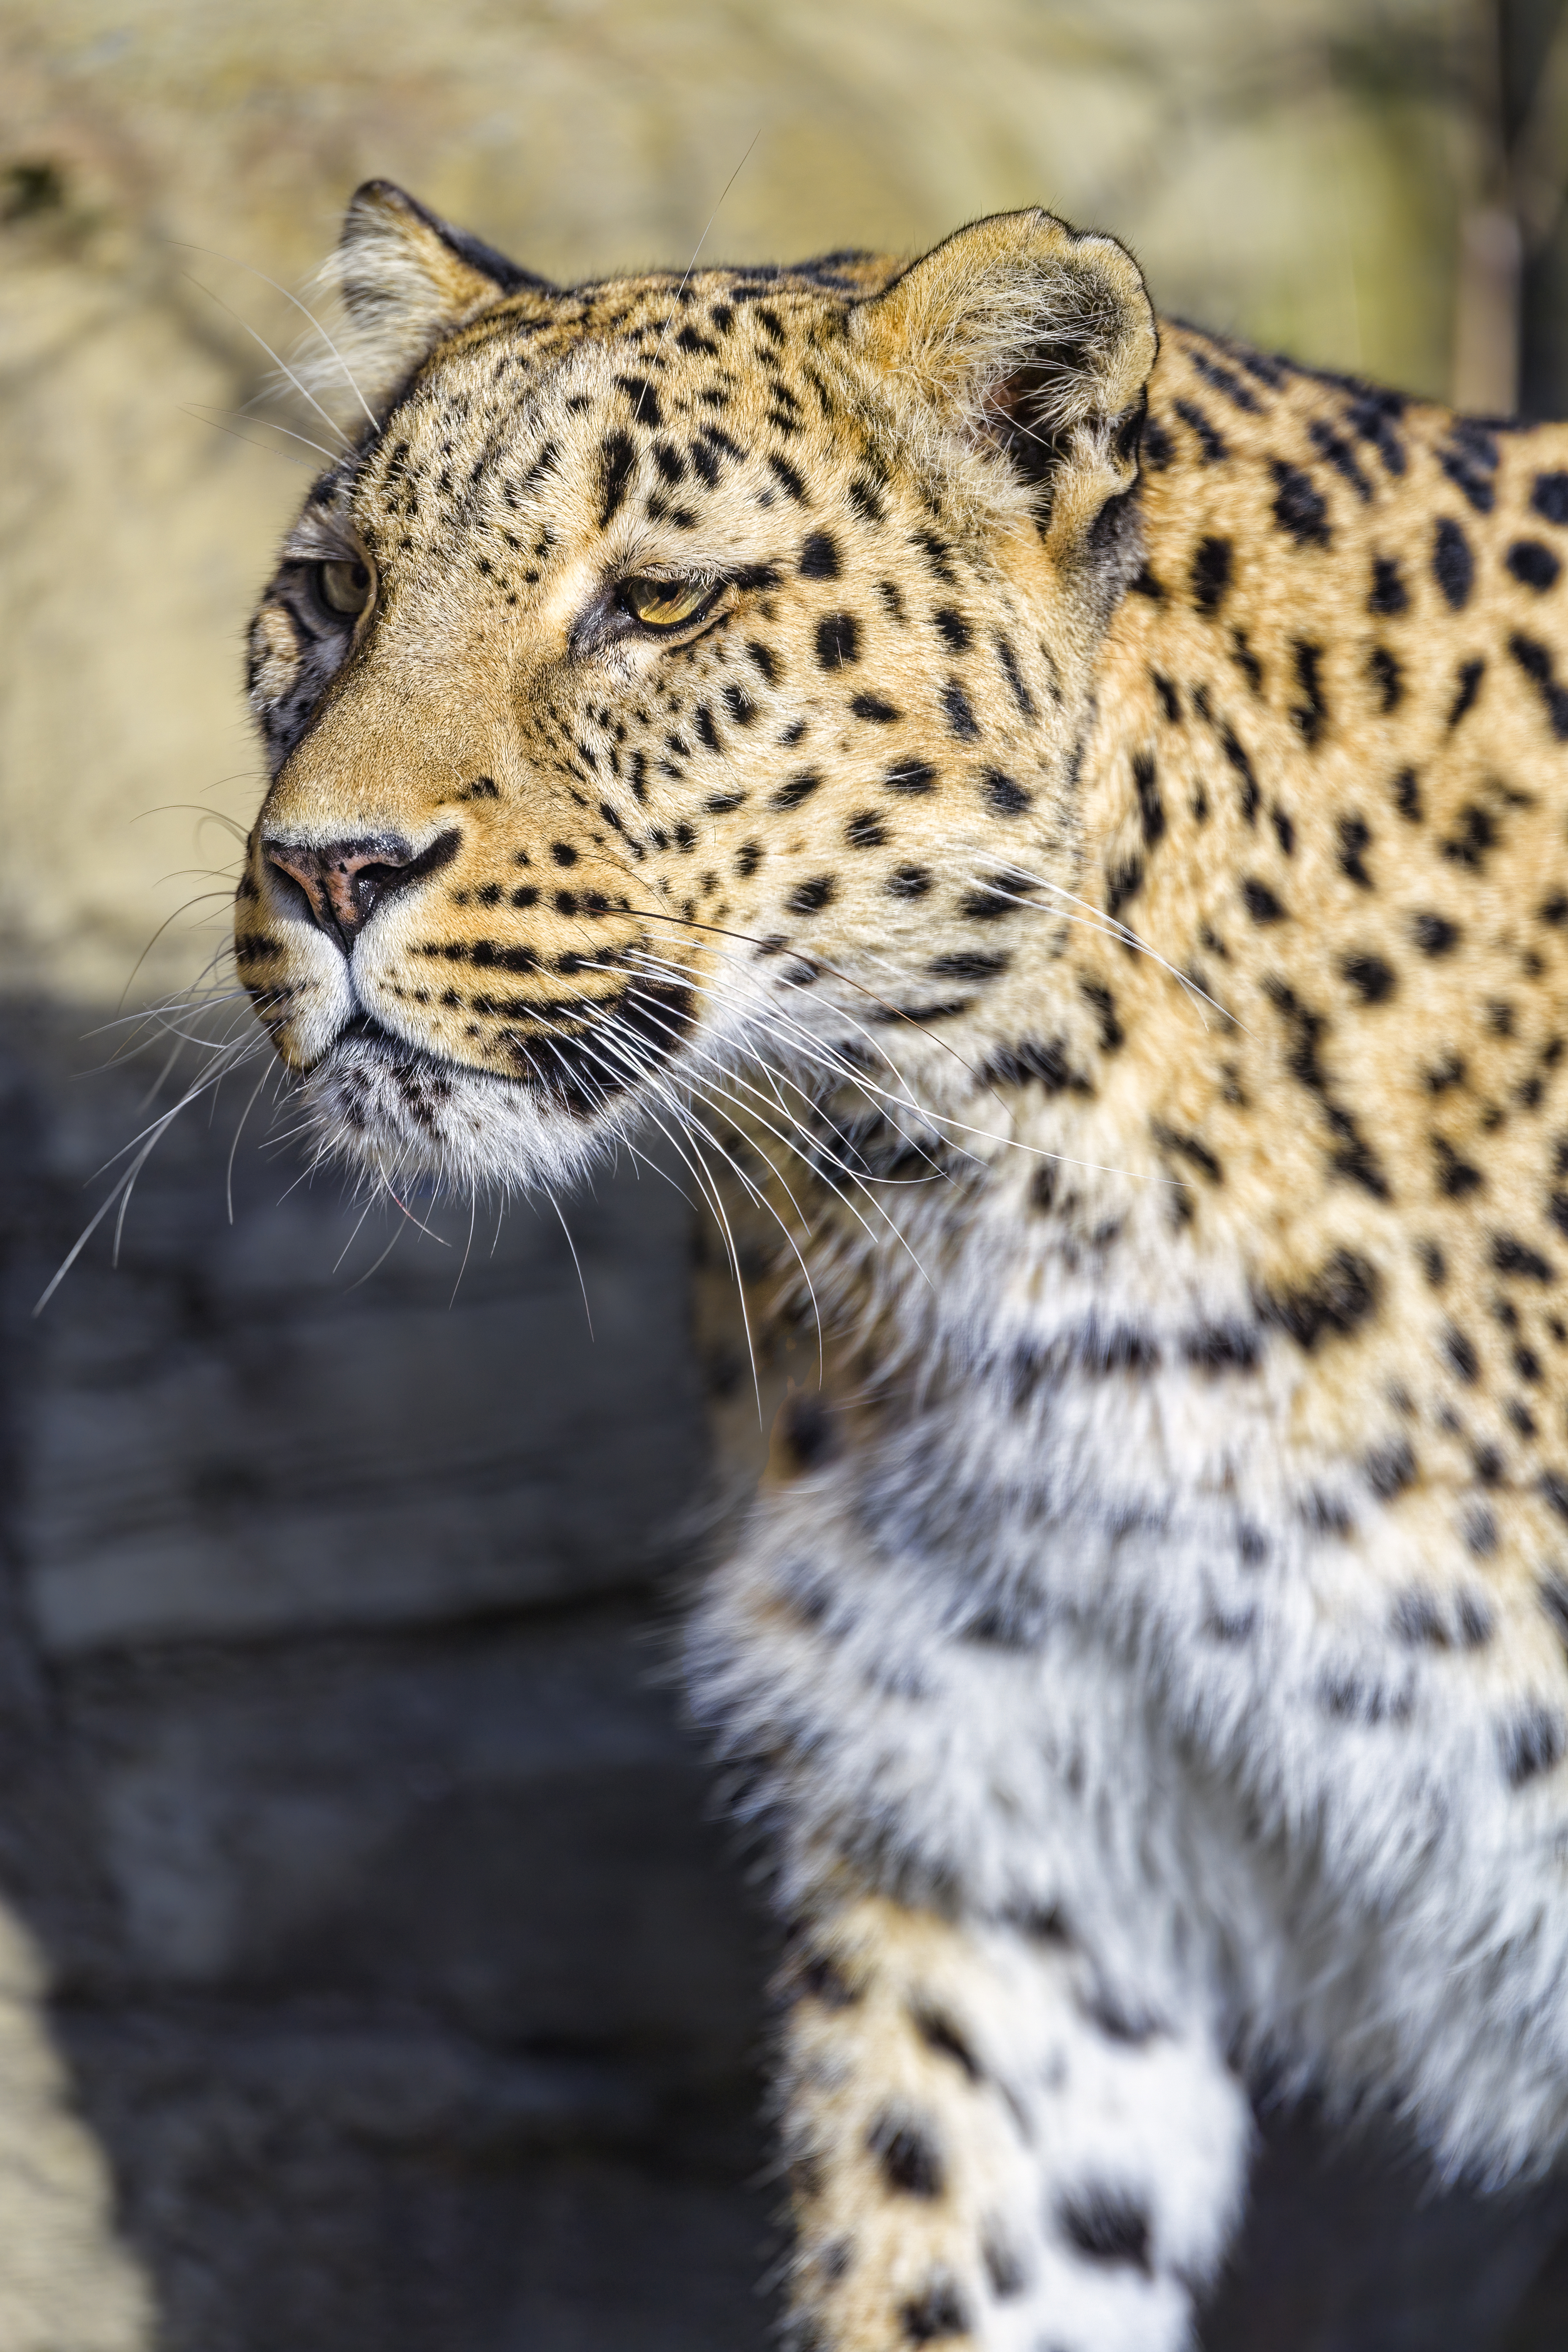 A leopard close-up